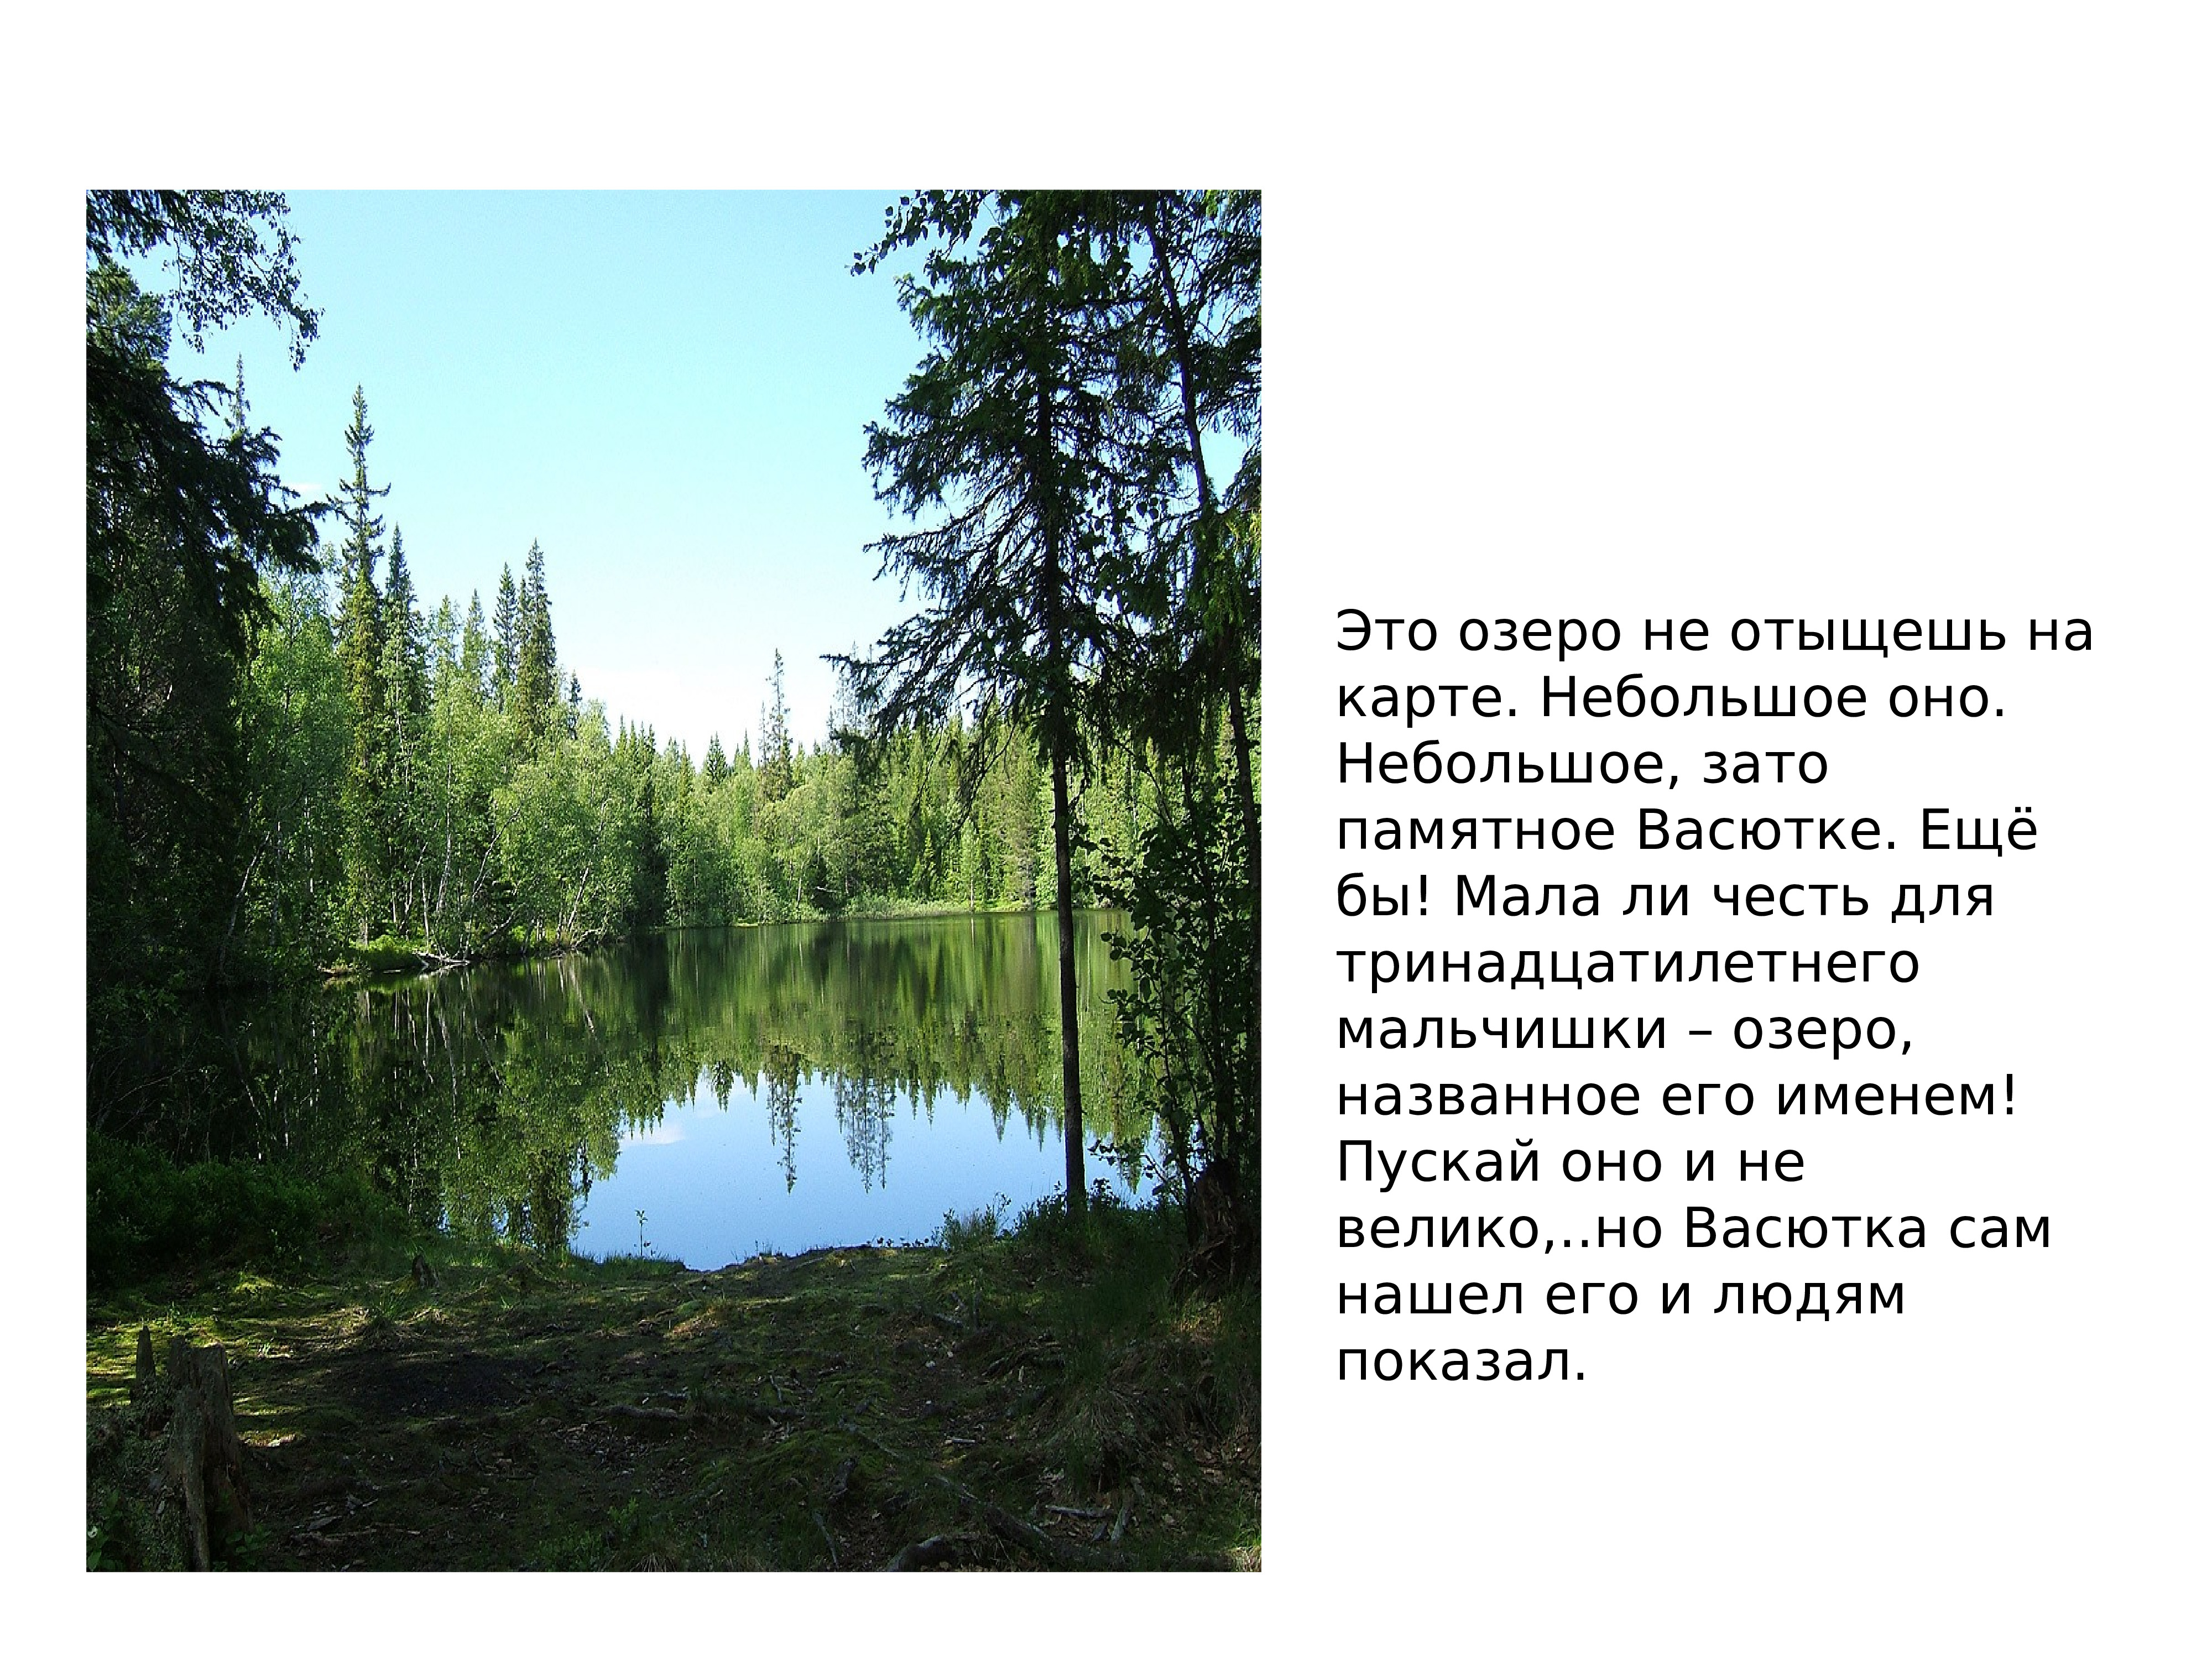 Васюткино озеро где оно. Низовья Енисея Васюткино озеро. Васюткино озеро Астафьев Тайга. Васюткино озеро Красноярский край. Васюткино озеро озеро карта.